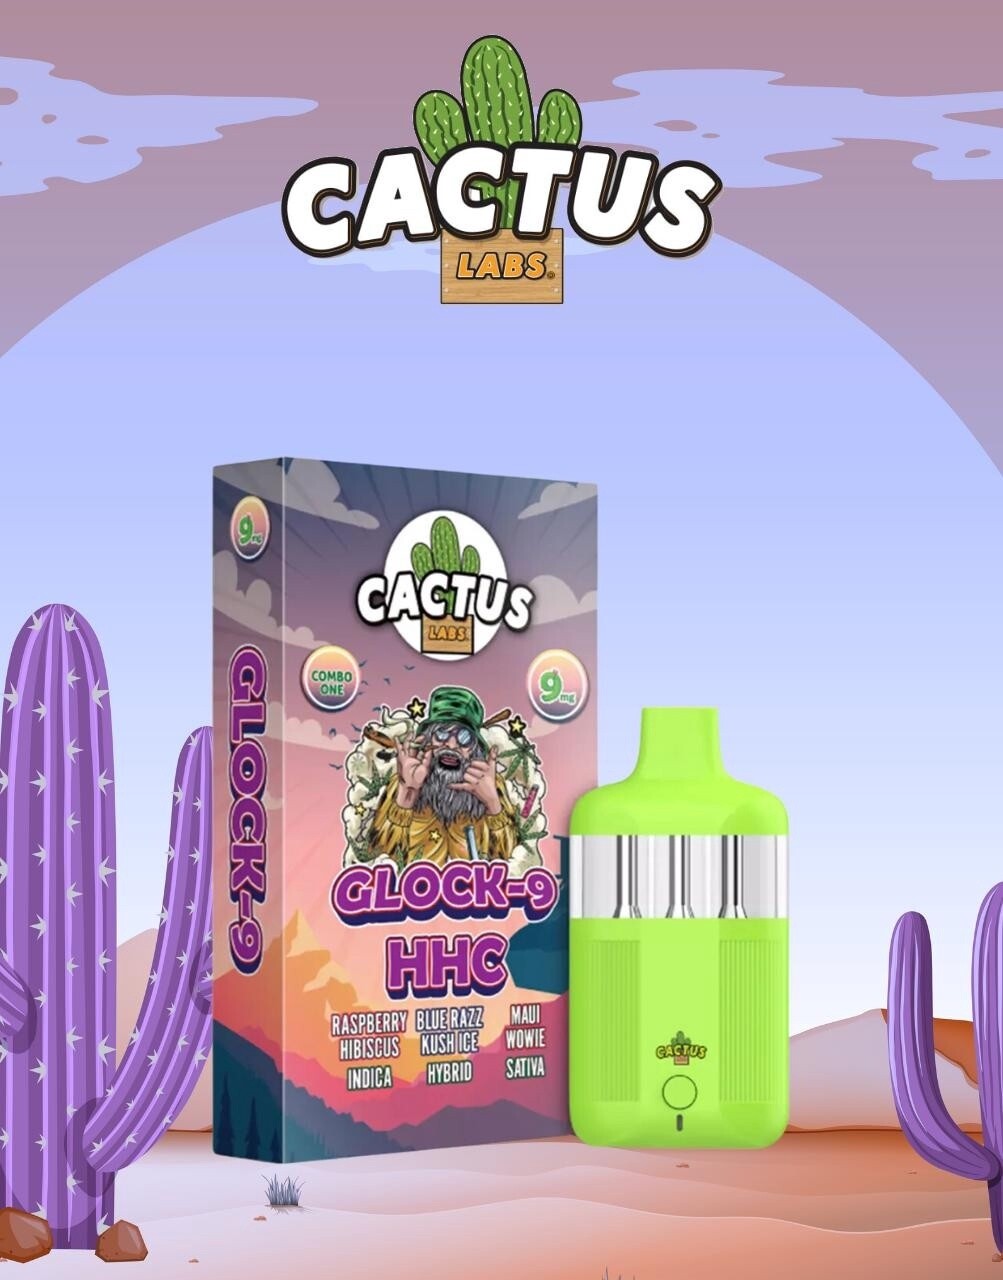 Cactus, 9G, 3 Blends - Indica, Hybrid, Sativa (Combo 1)